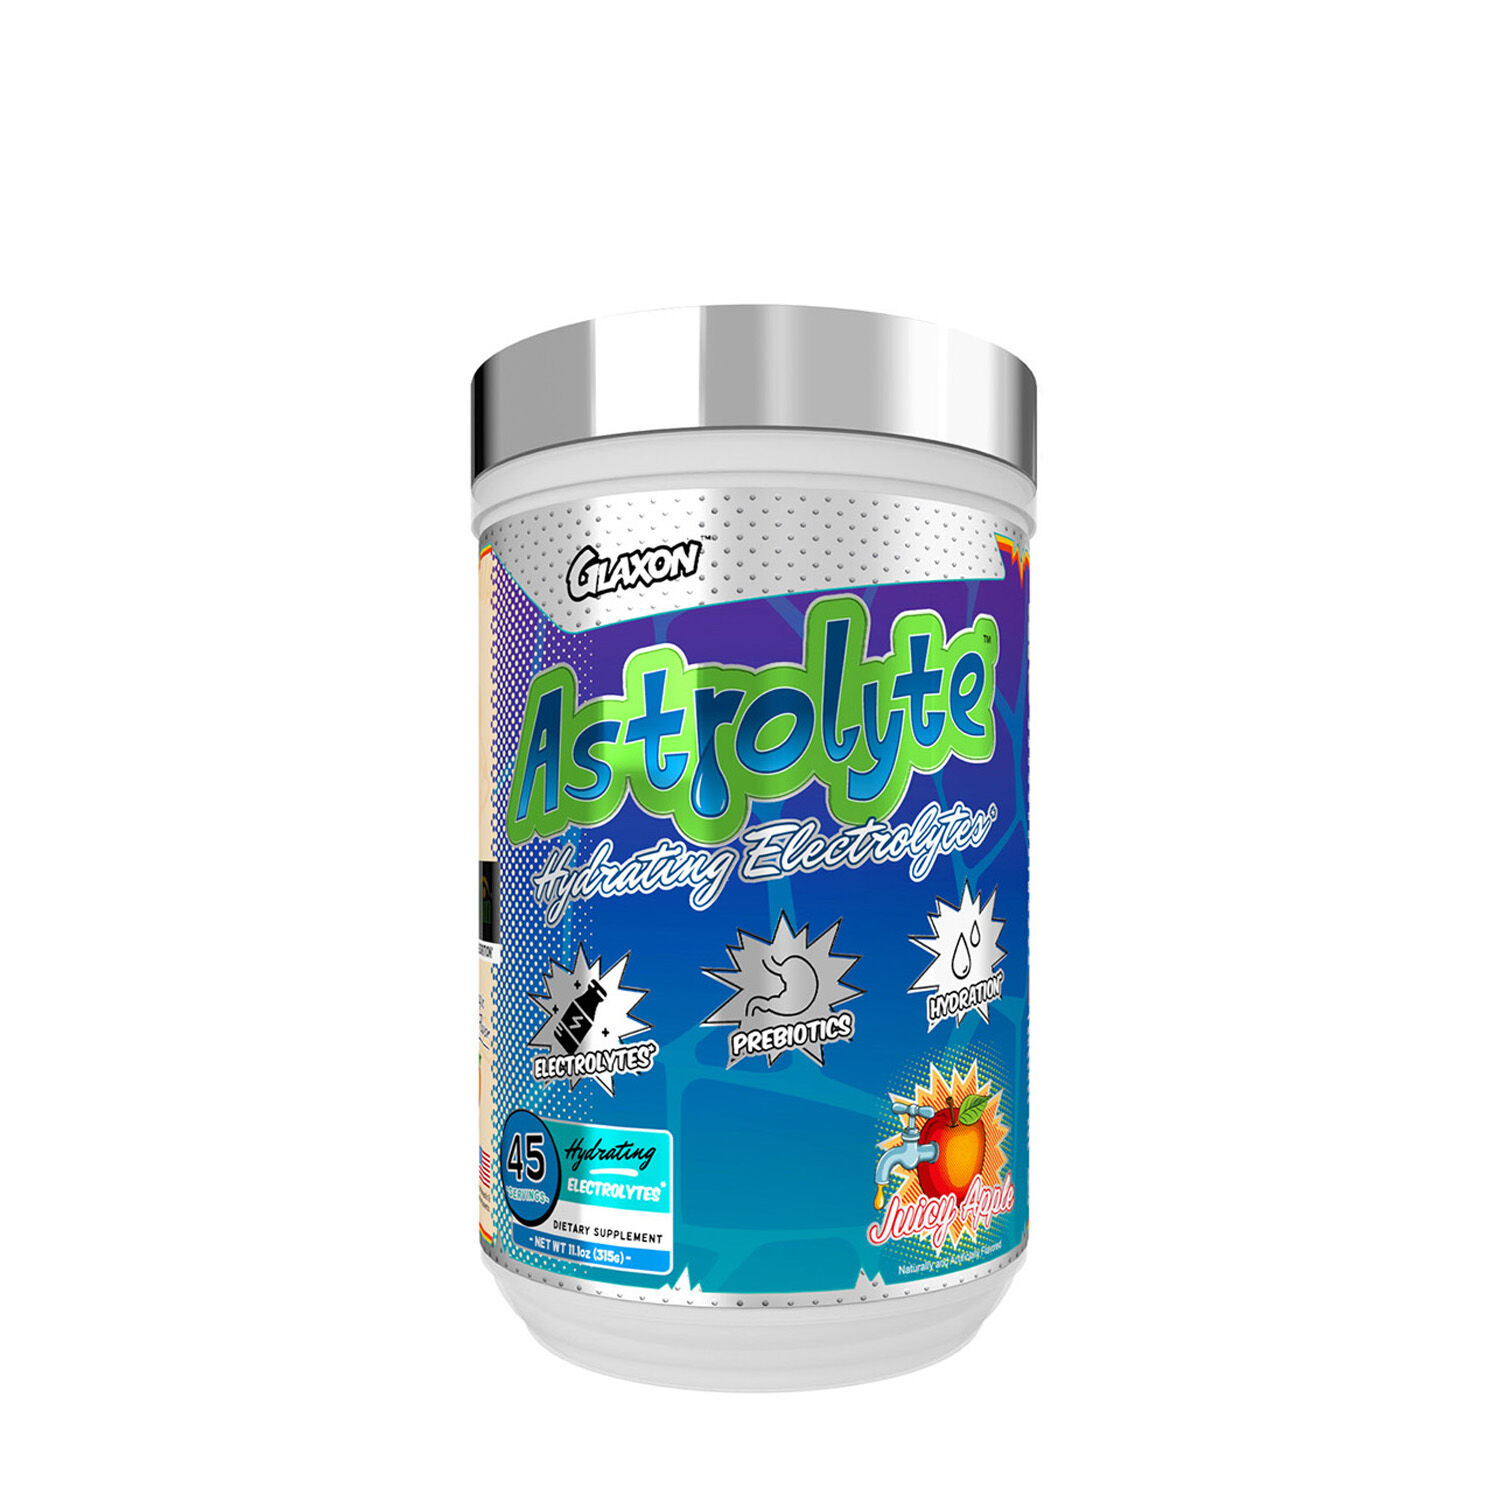 Astrolyte™ Hydrating Electrolytes - Juicy Apple - 11.1 oz.